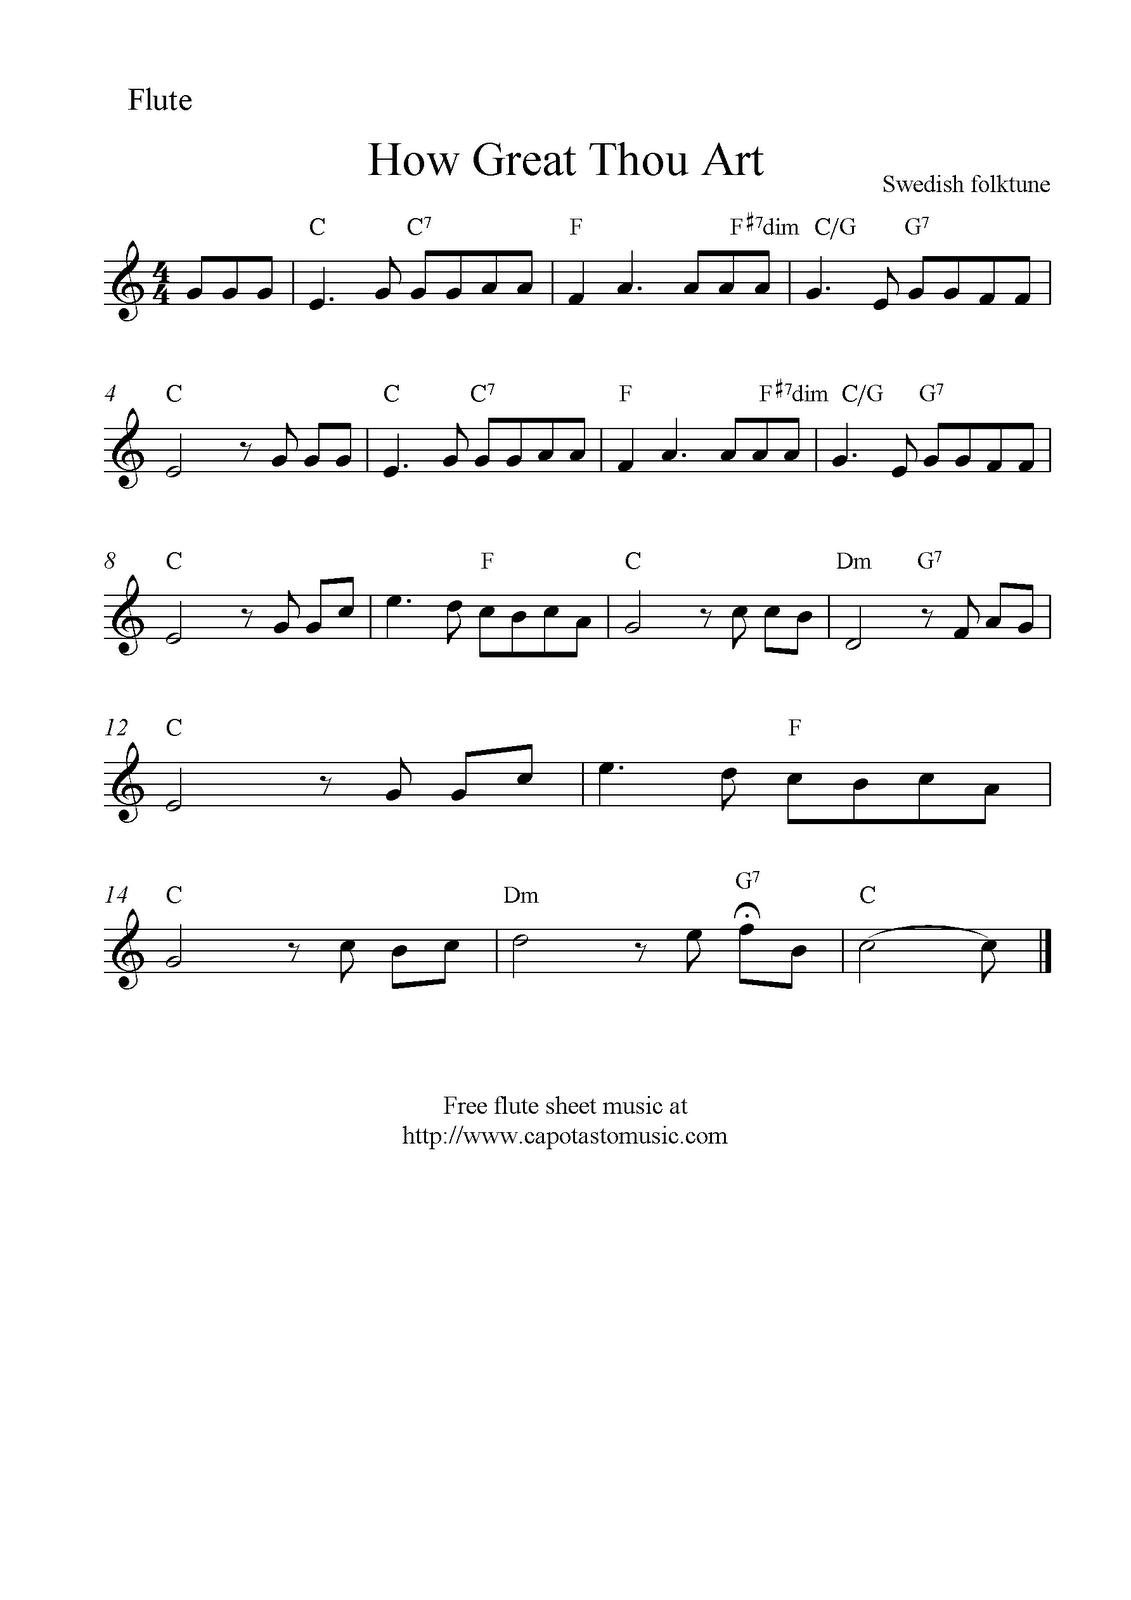 How Great Thou Art, Free Christian Flute Sheet Music Notes - Free Printable Flute Sheet Music